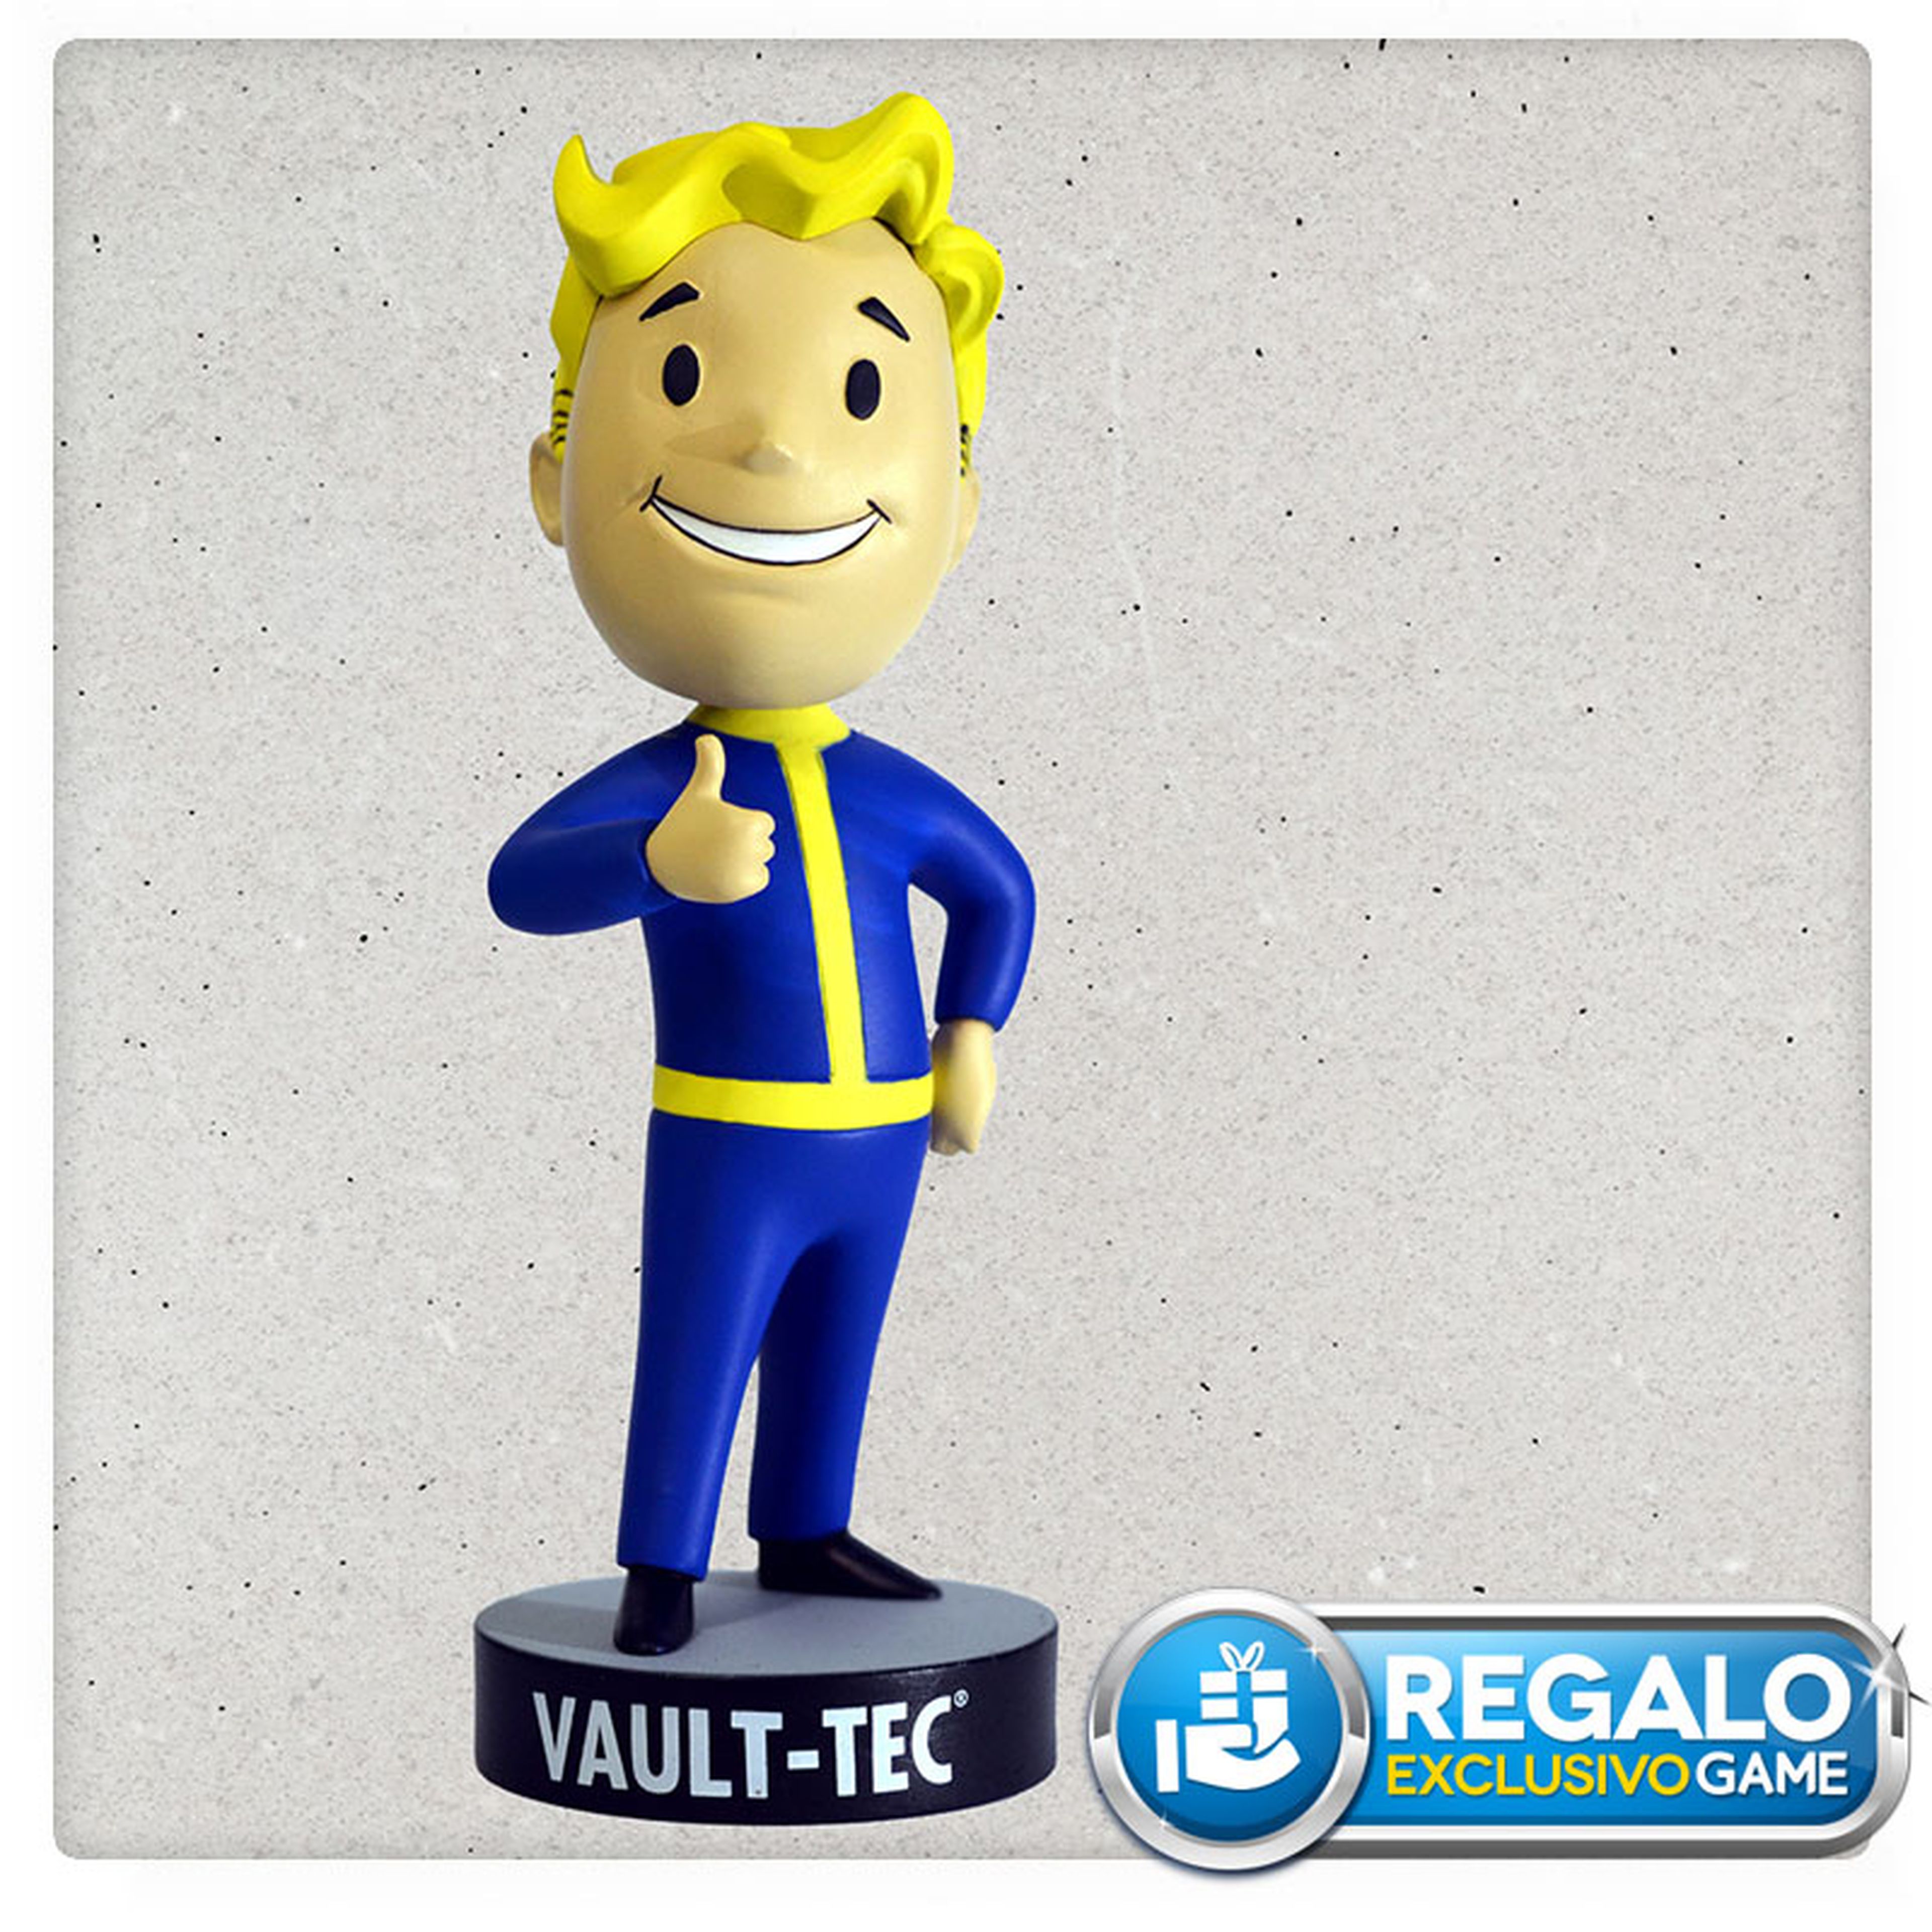 Vault-Boy de regalo al reservar Fallout 4 en GAME